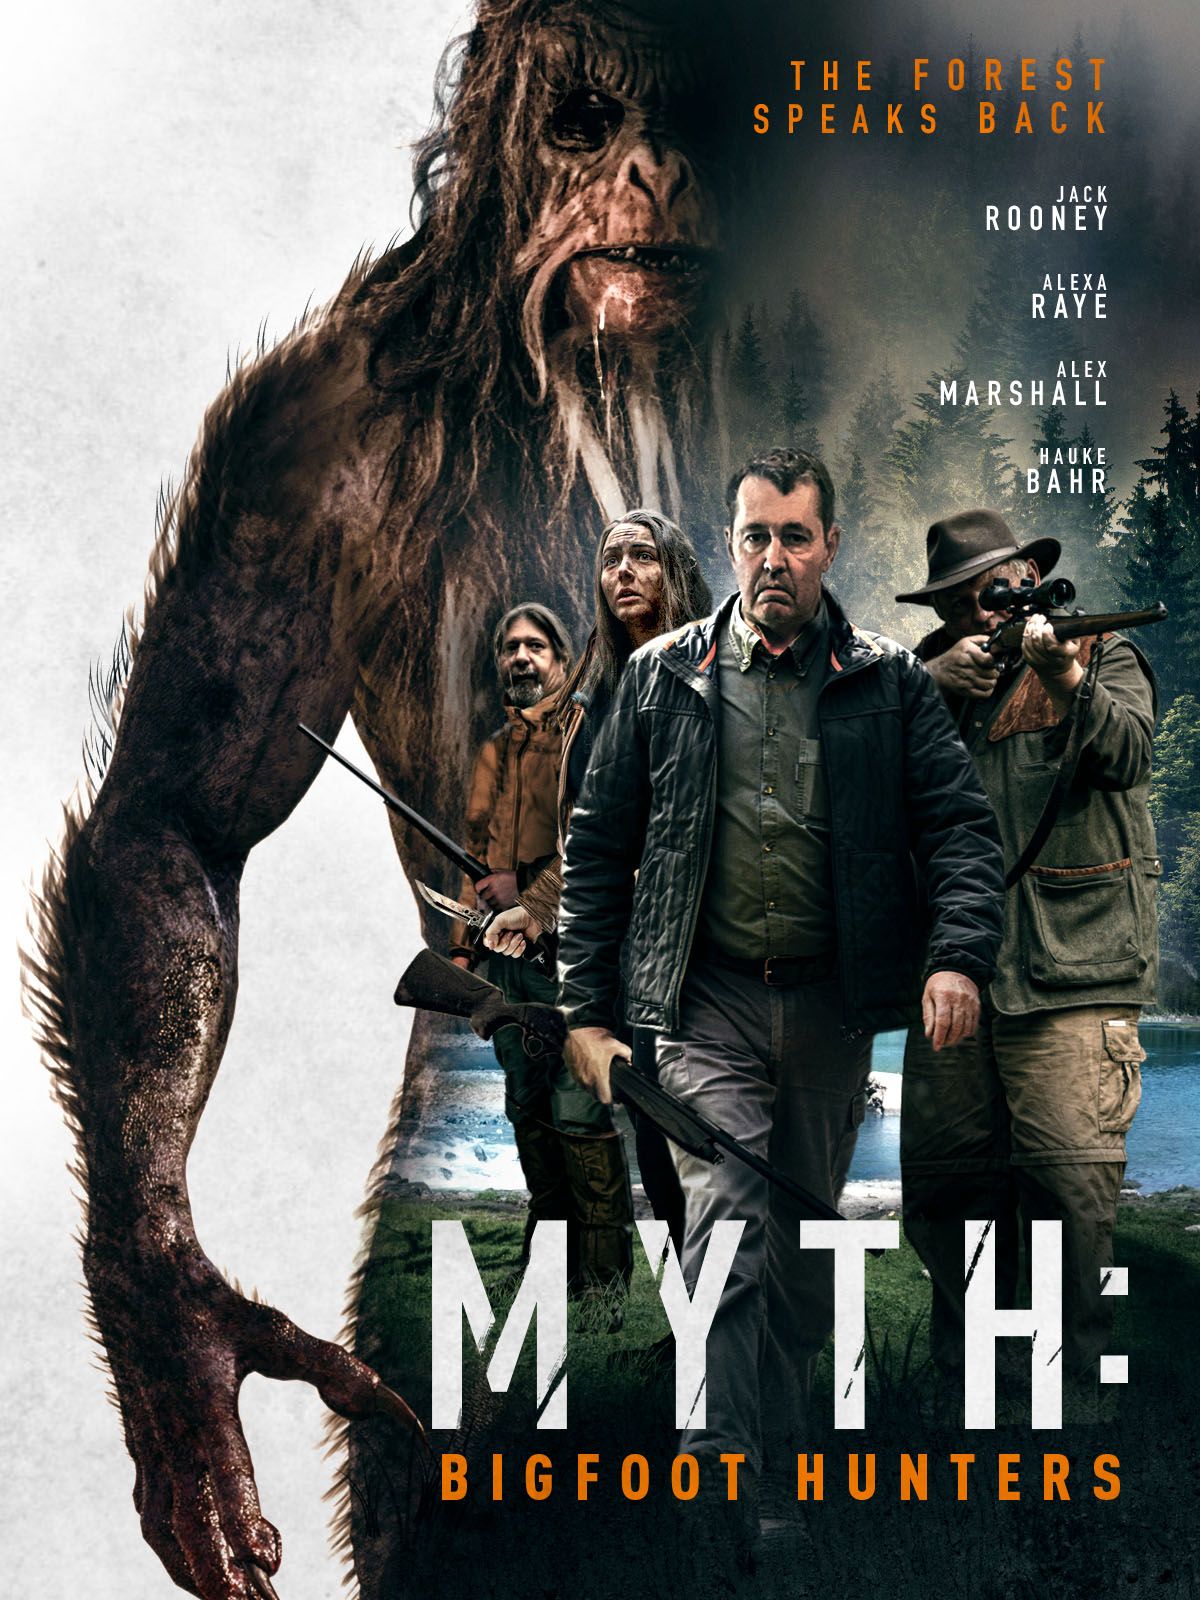 Keyart for the movie Myth: Bigfoot Hunters